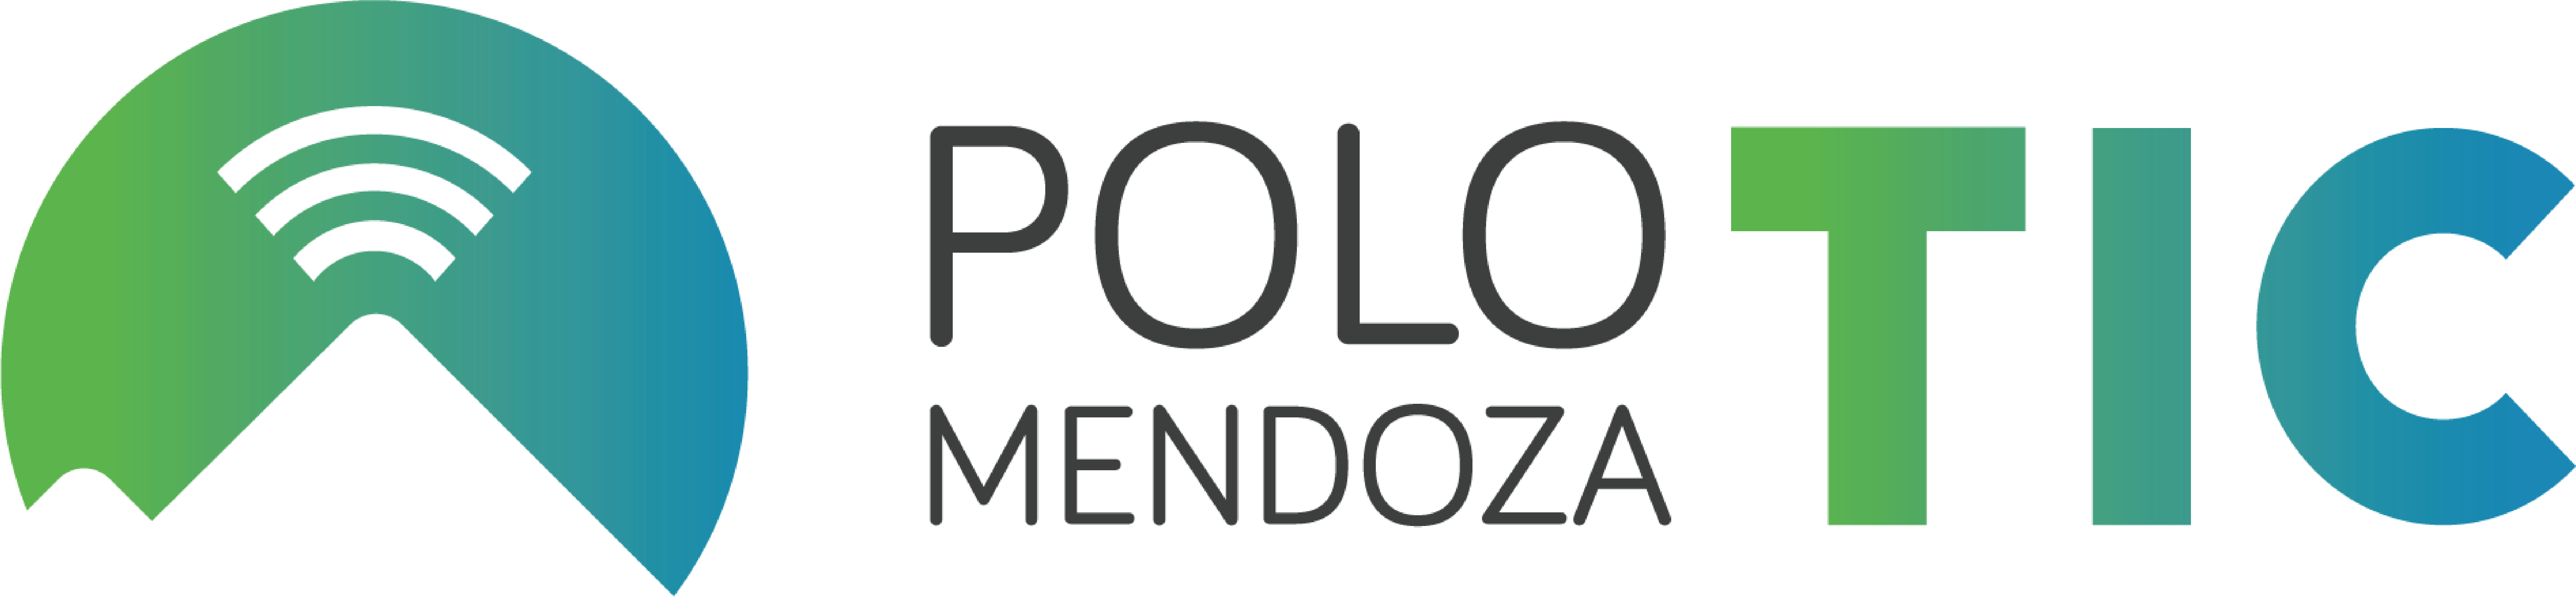 Polo TIC Mendoza organiza un webinar de Cultura Maker